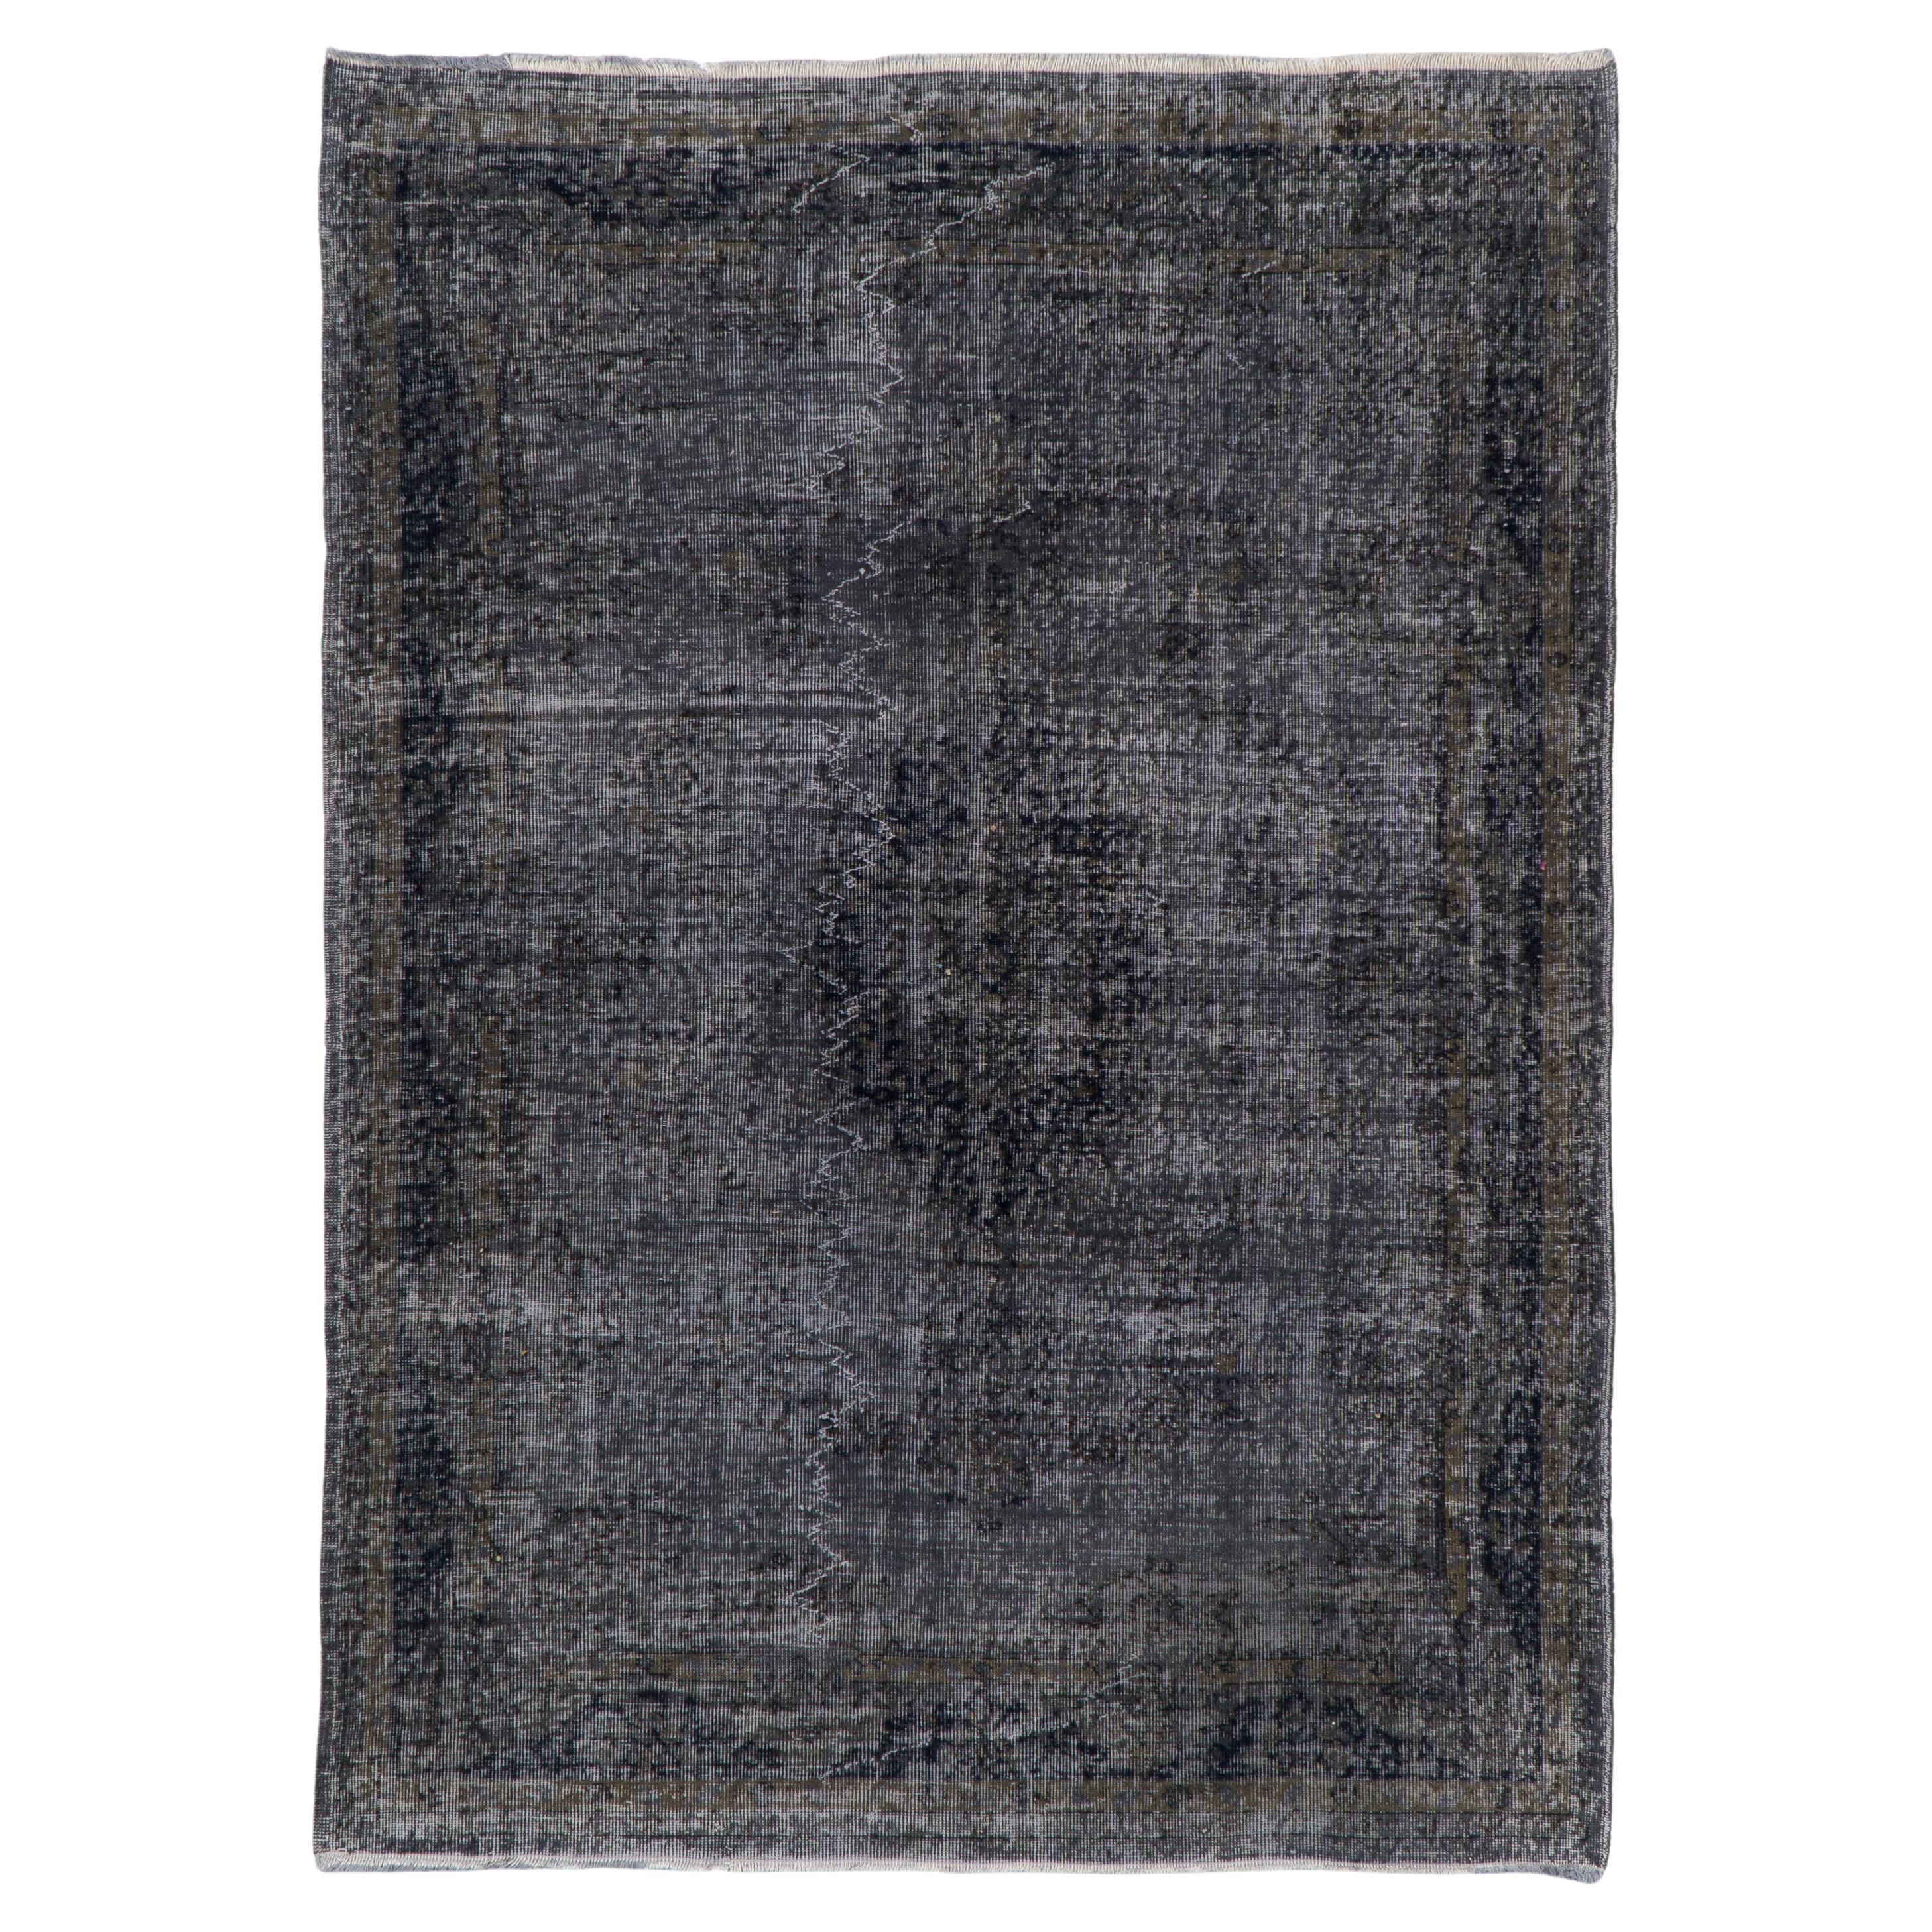 5.8x8 ft Modern Handmade Area Rug in Dark Gray. Contemporary Turkish Carpet